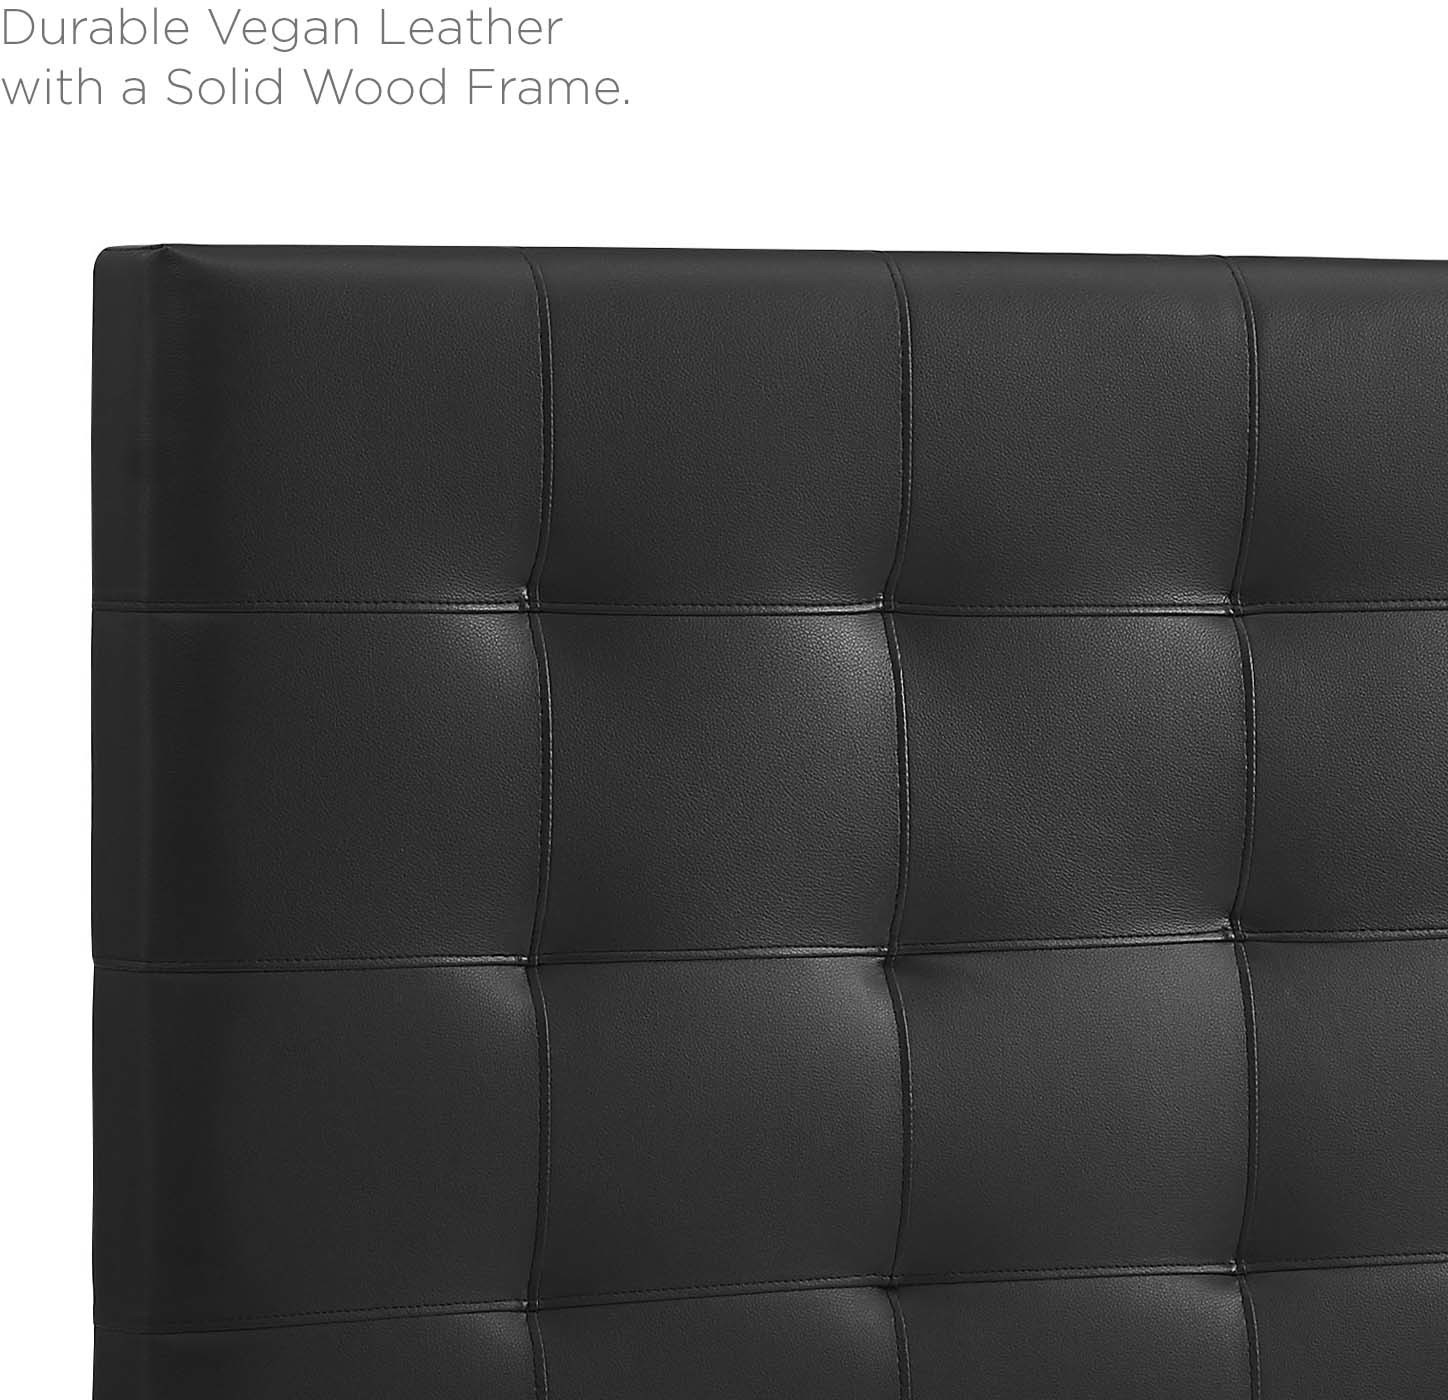 upholstered headboard queen Modway Furniture Headboards Black